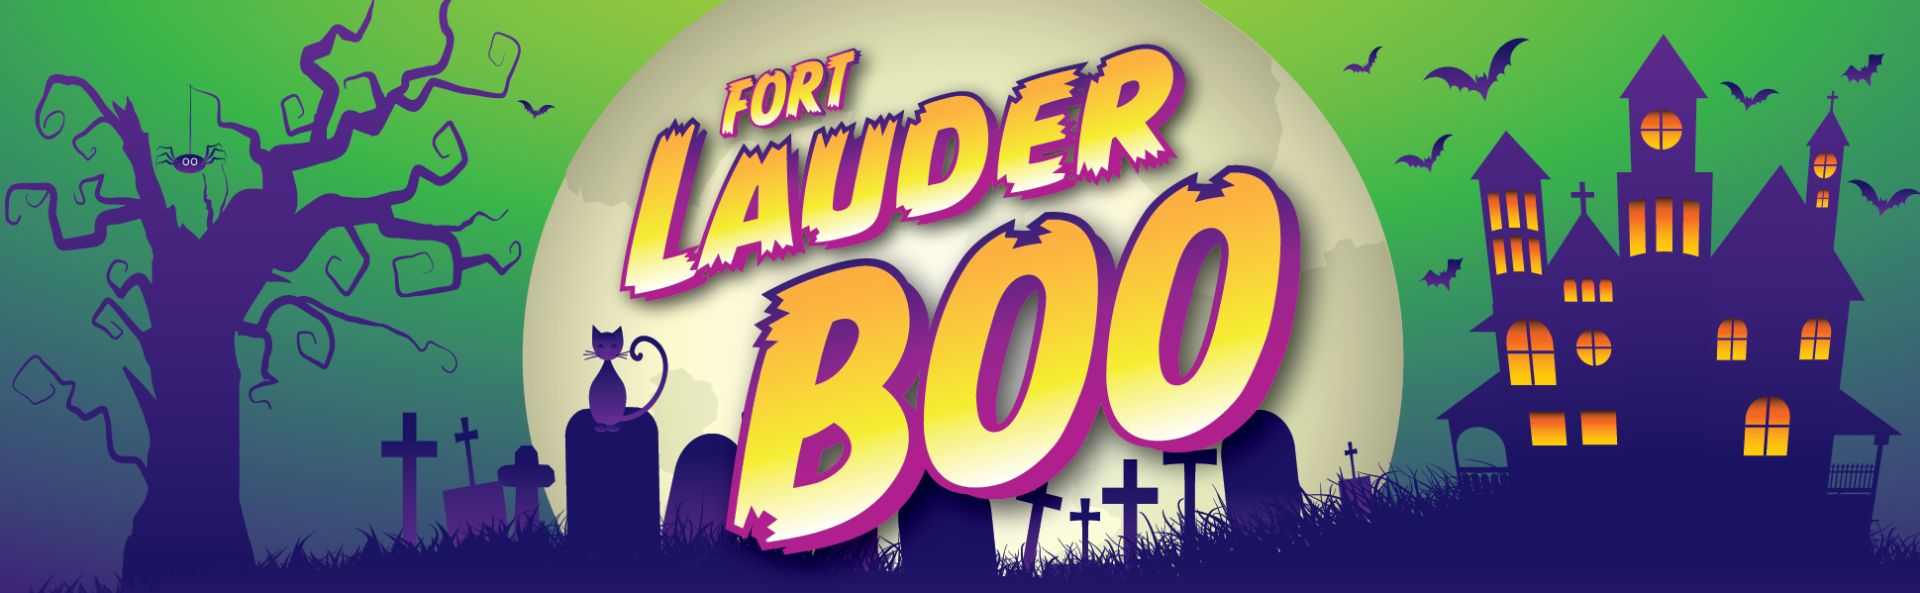 Fort LauderBOO Logo Web Banner